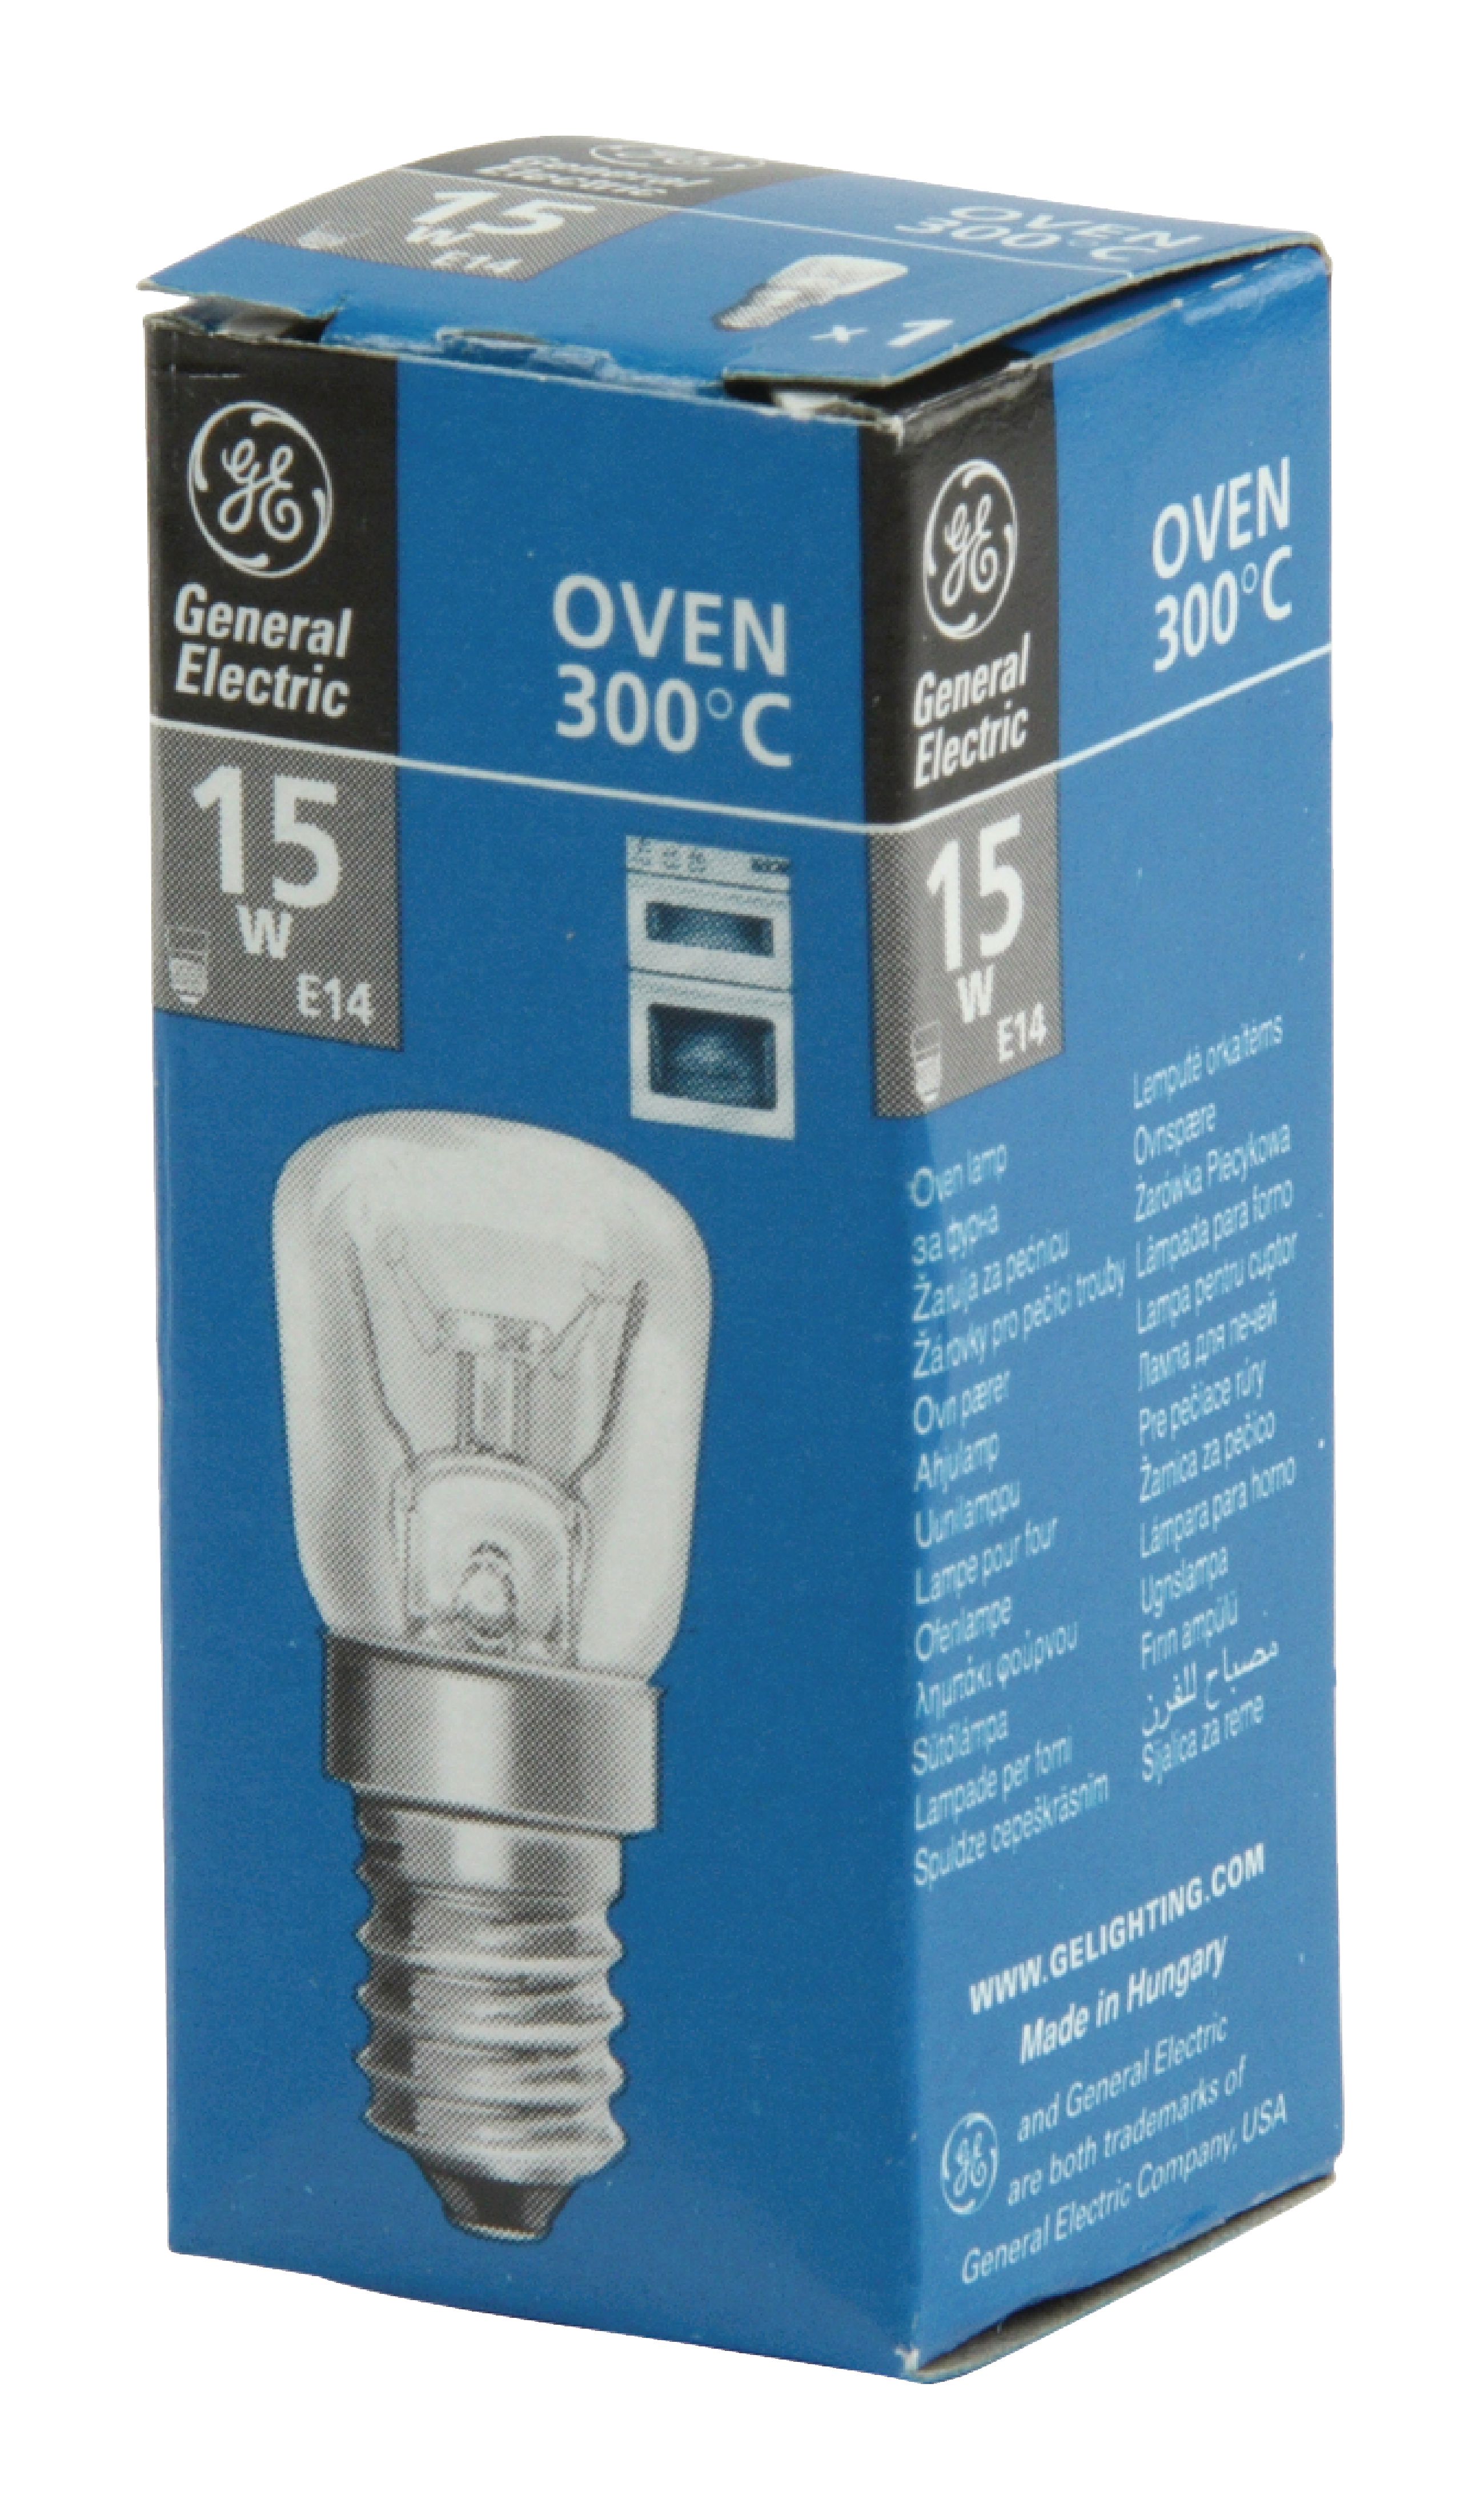 50279887009 : General Electric - Oven Lamp E14 15 W Original Part ...